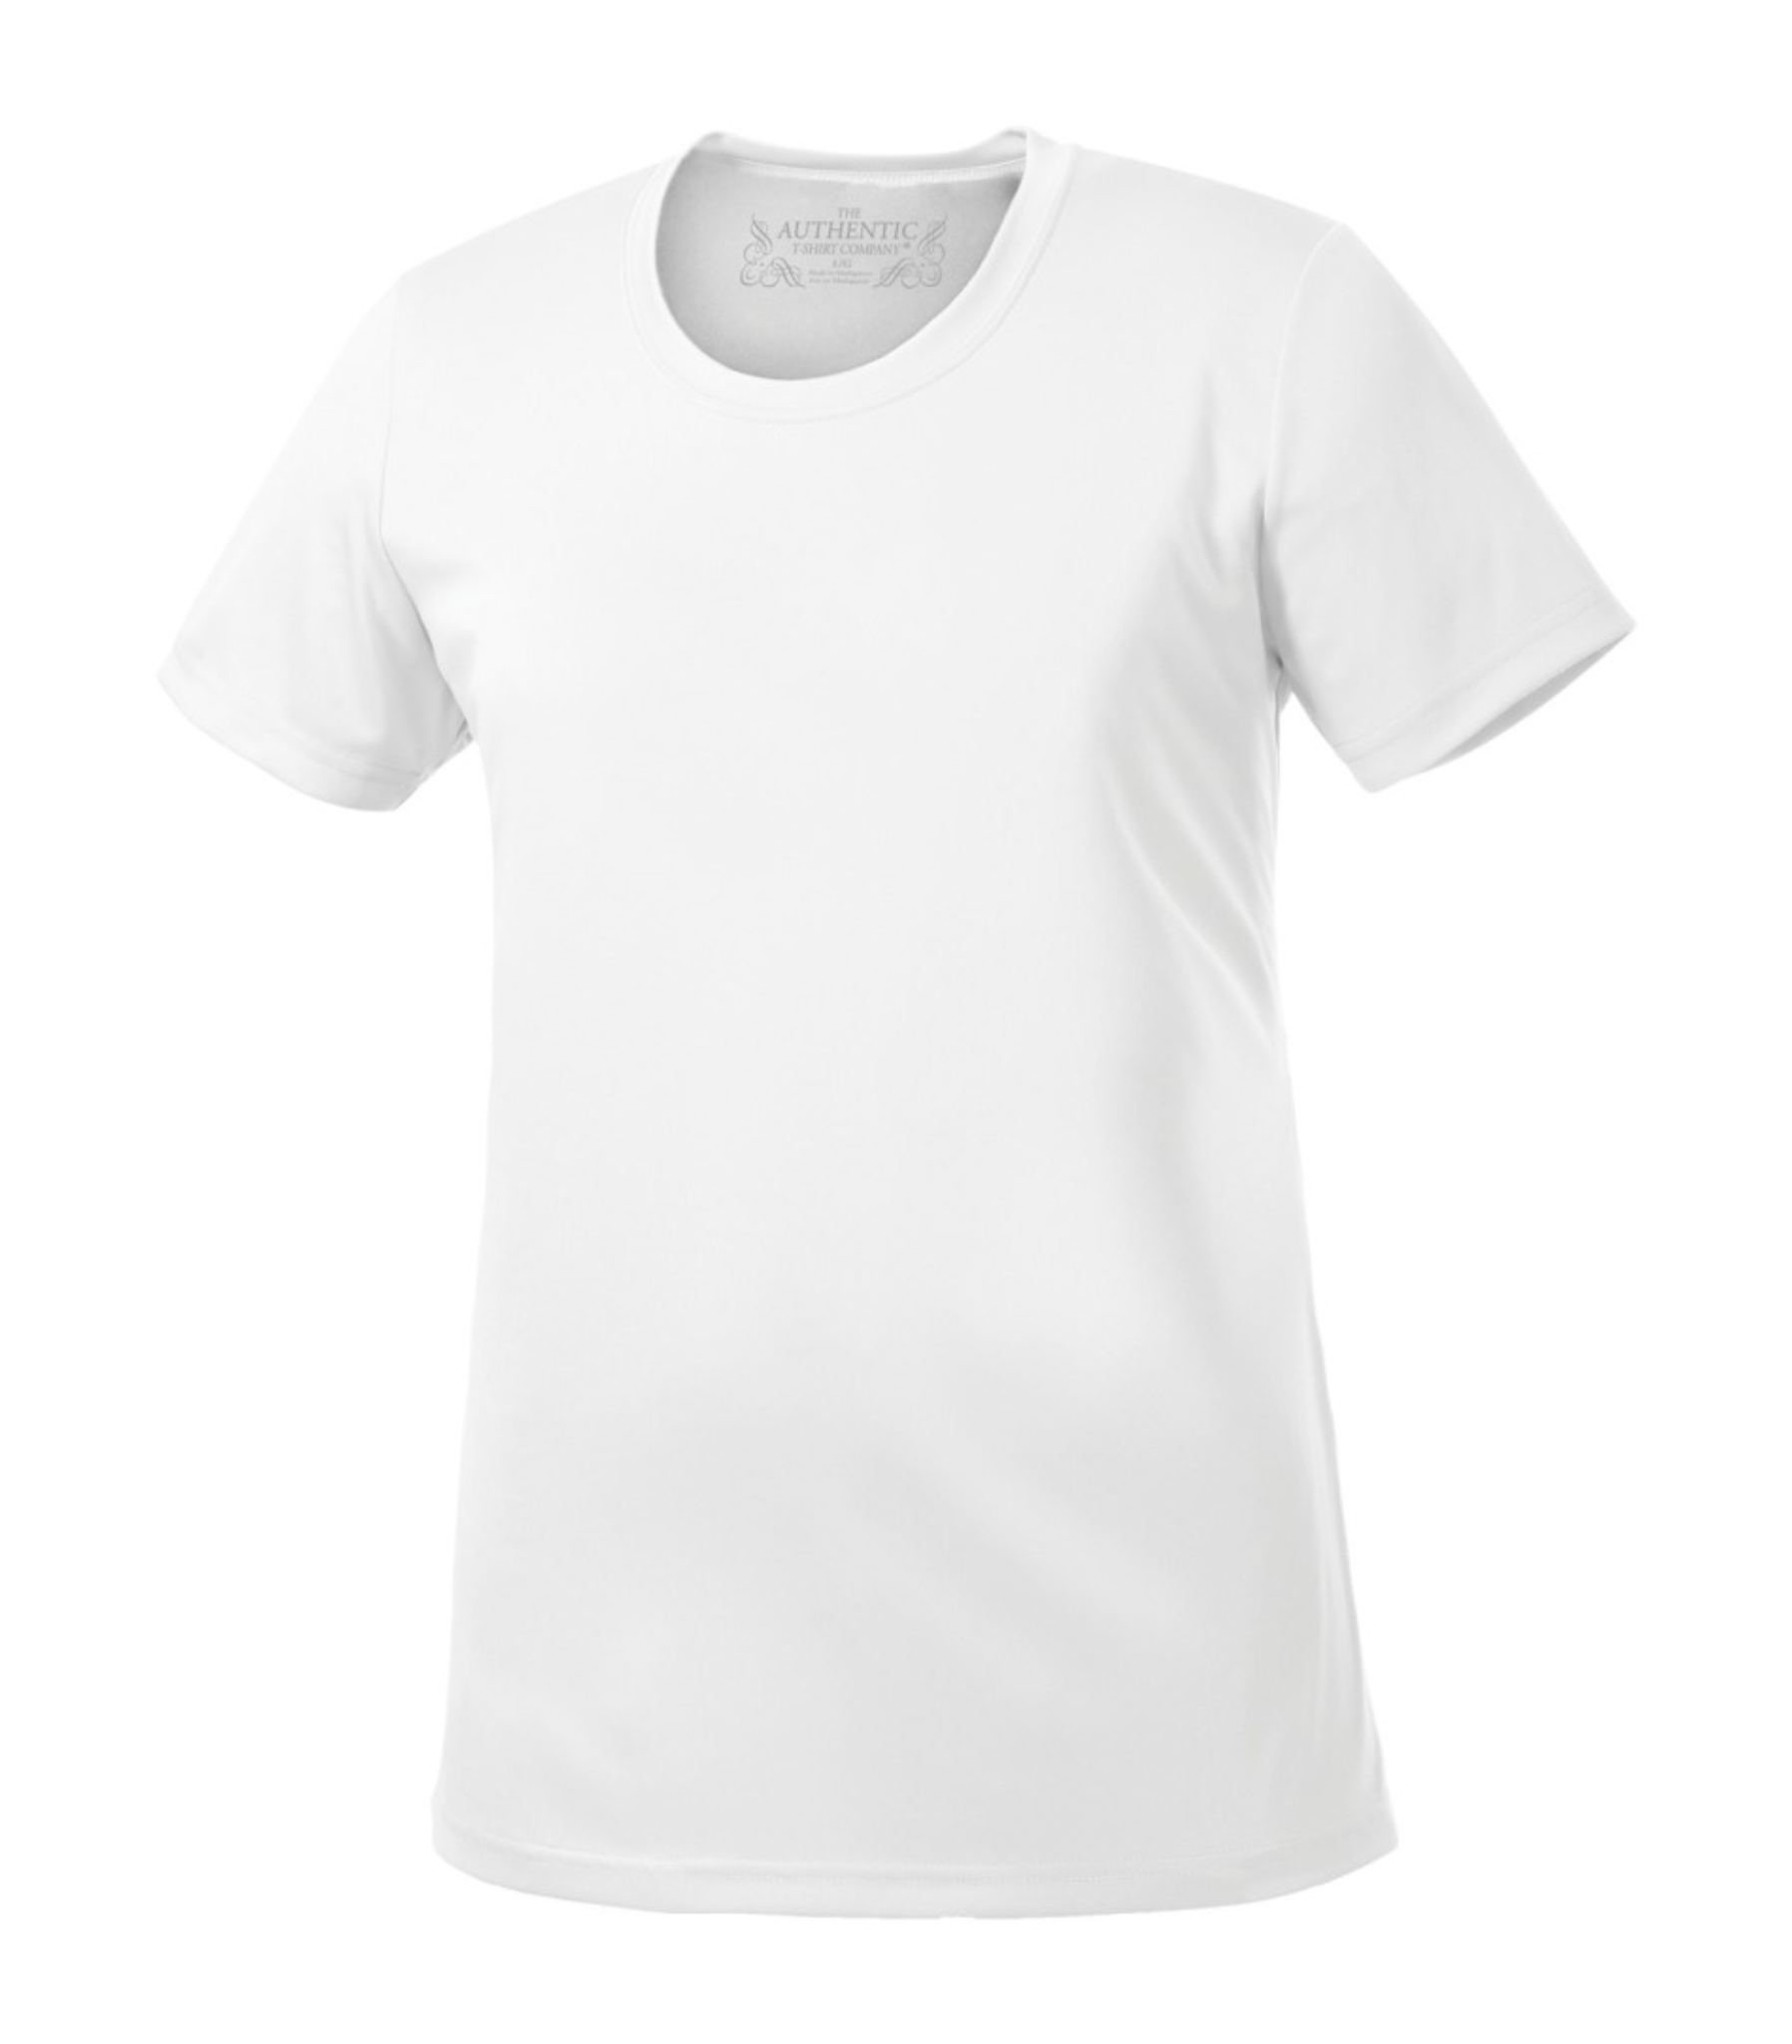 Ladies T-Shirt - Polyester - ATC L350